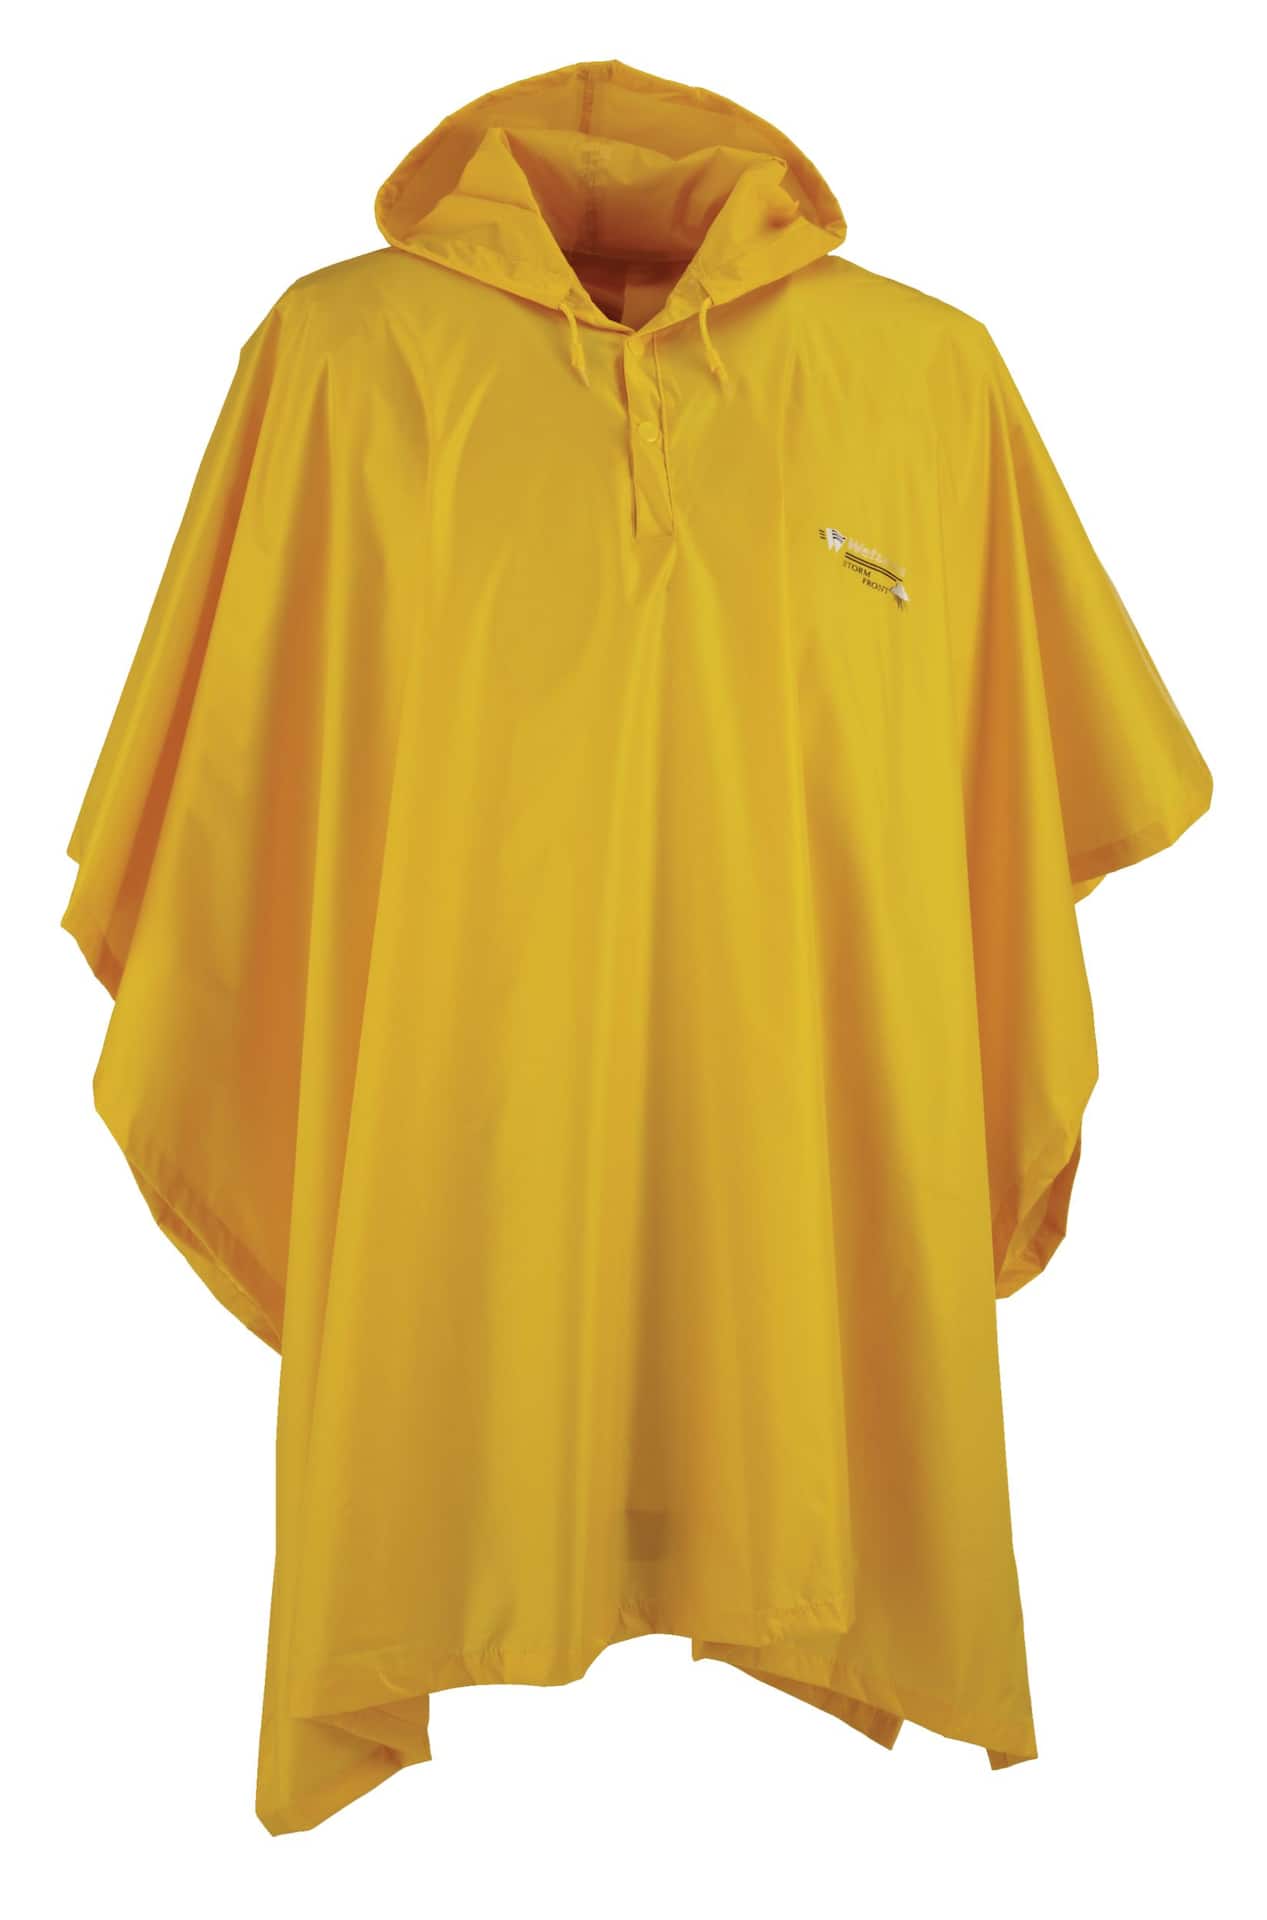 Long Full-body Waterproof Raincoat MenThicken Rain Poncho